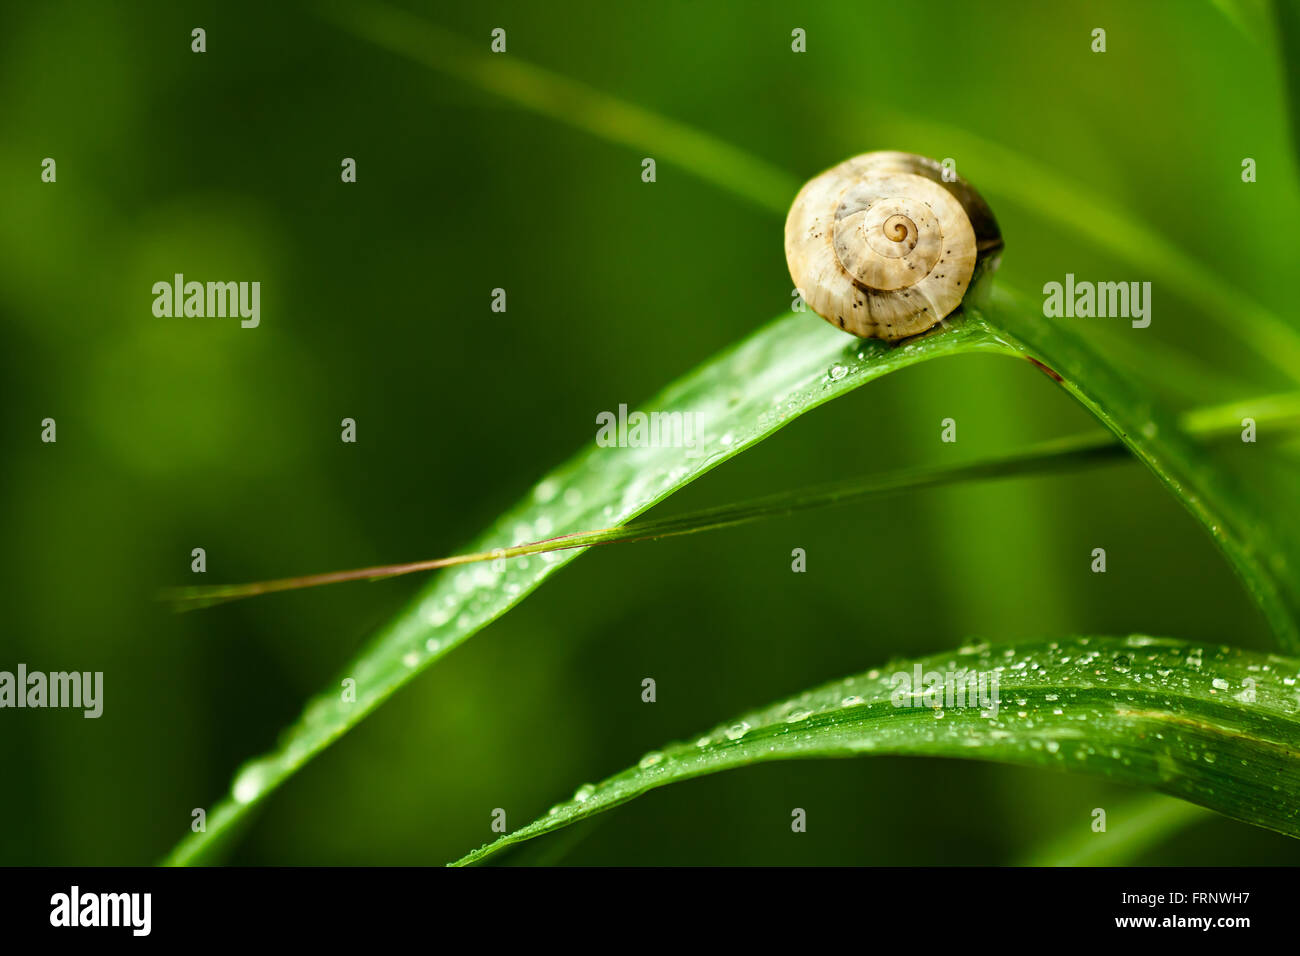 Snail on Wet Green Leaves Stock Photo